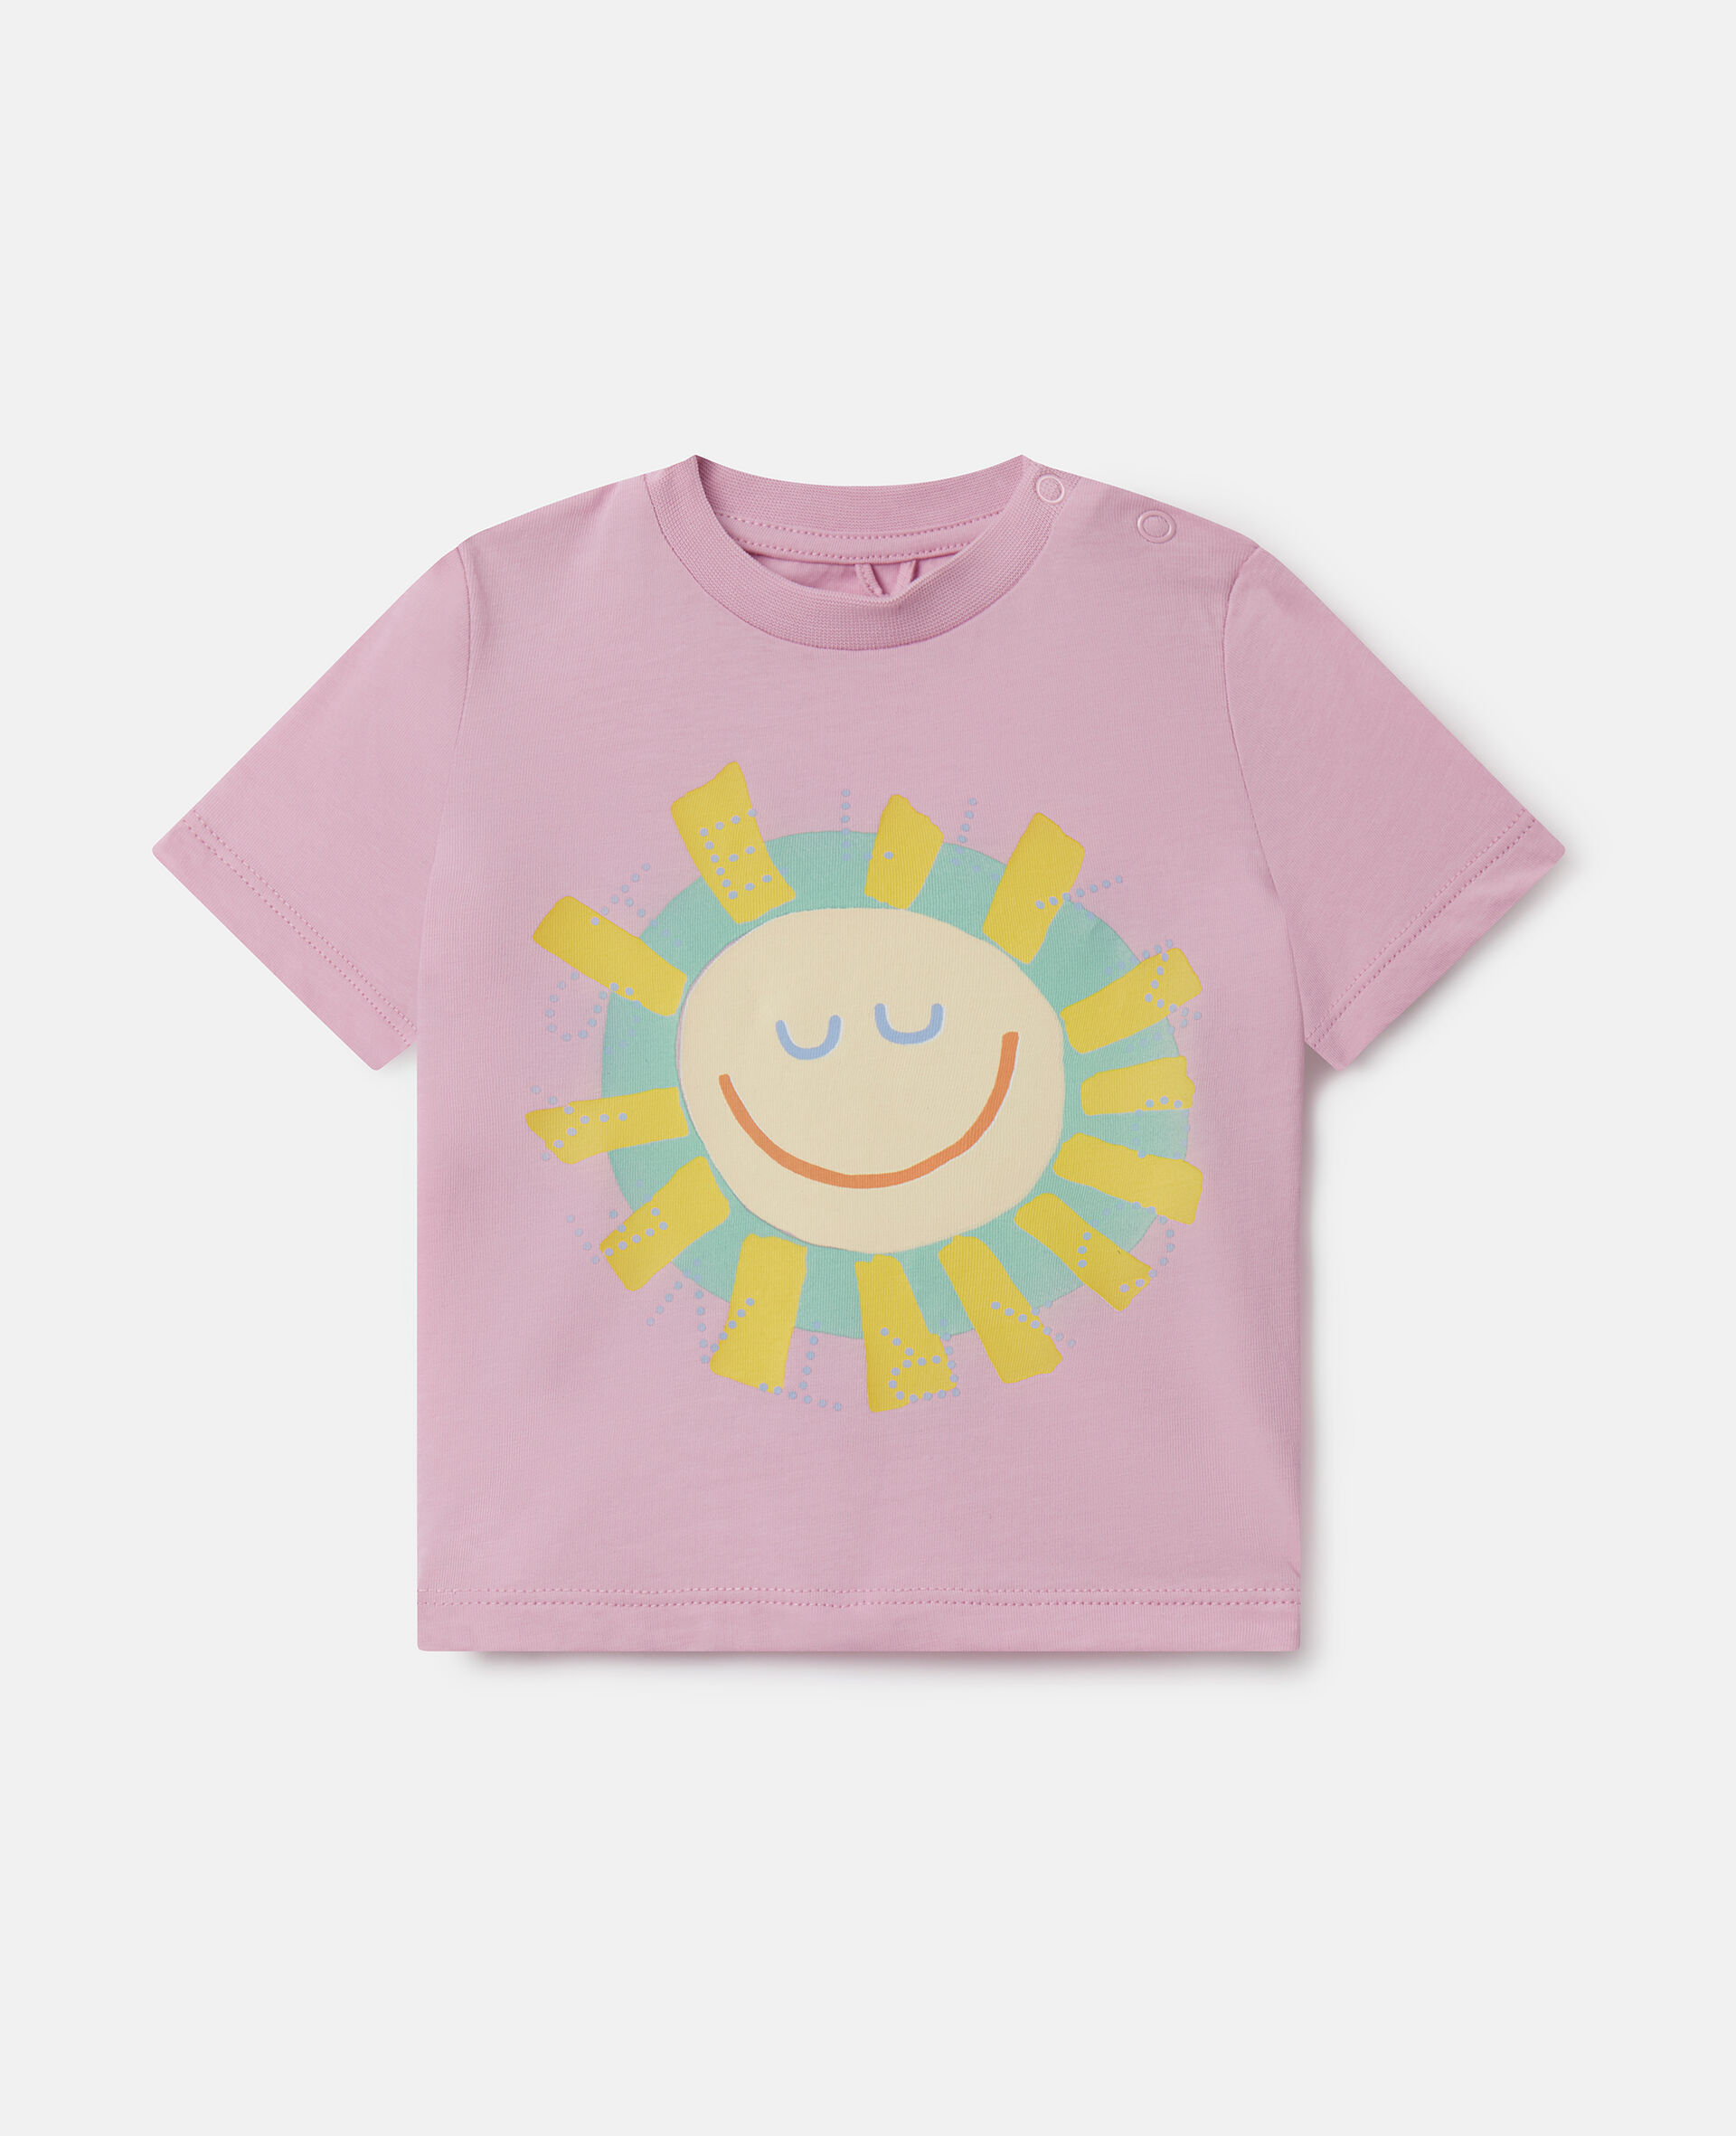 Medallion Logo Sunshine Sweatshirt-ピンク-model